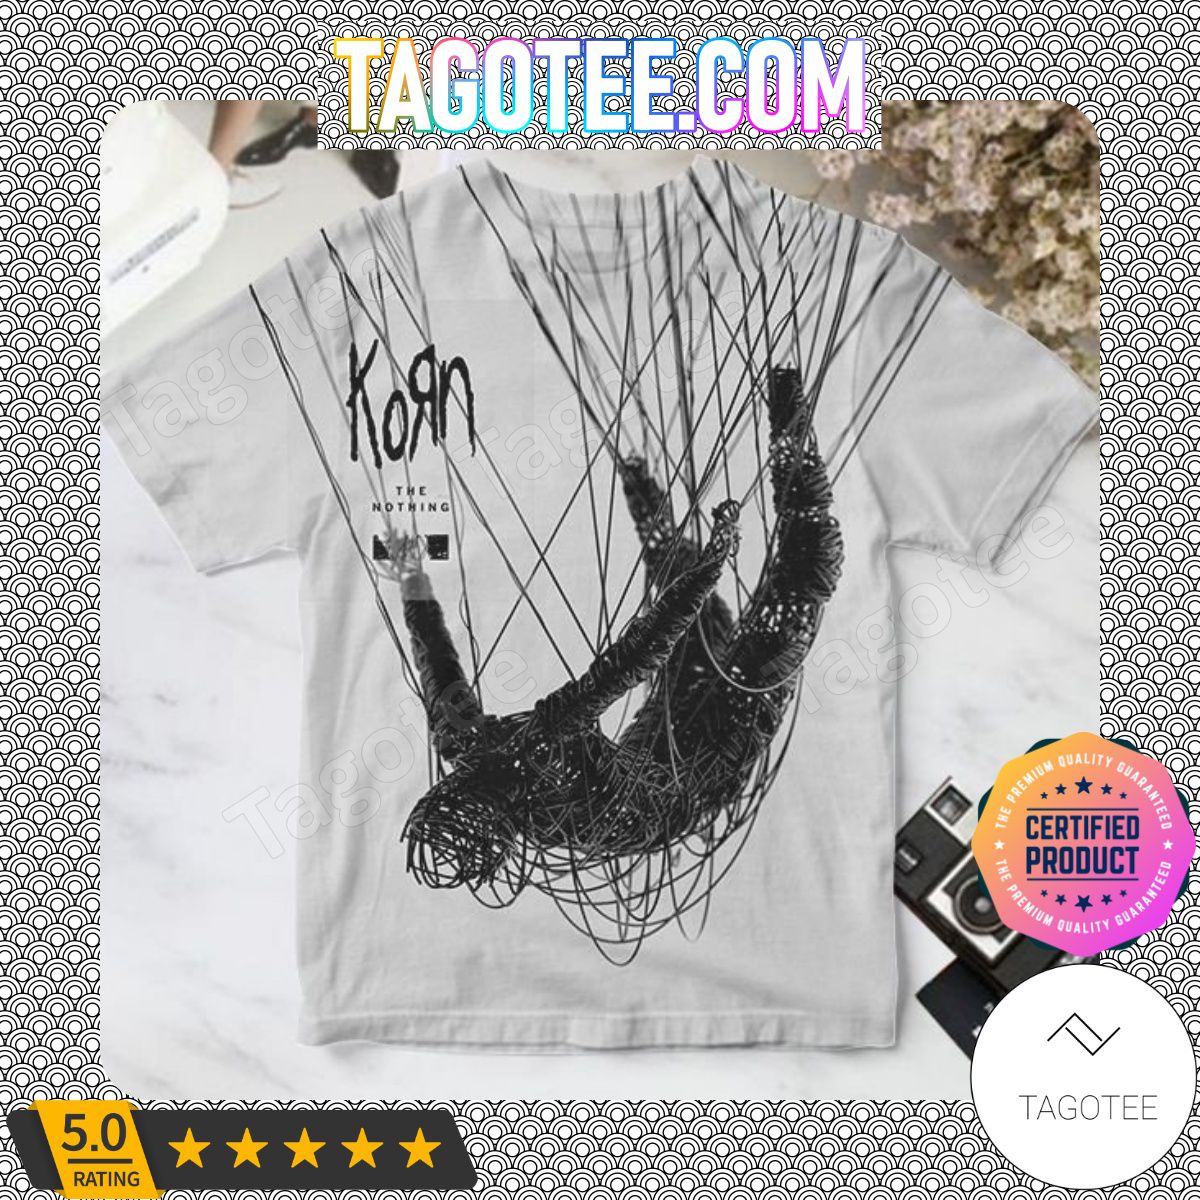 Korn The Nothing Album Cover For Fan Shirt